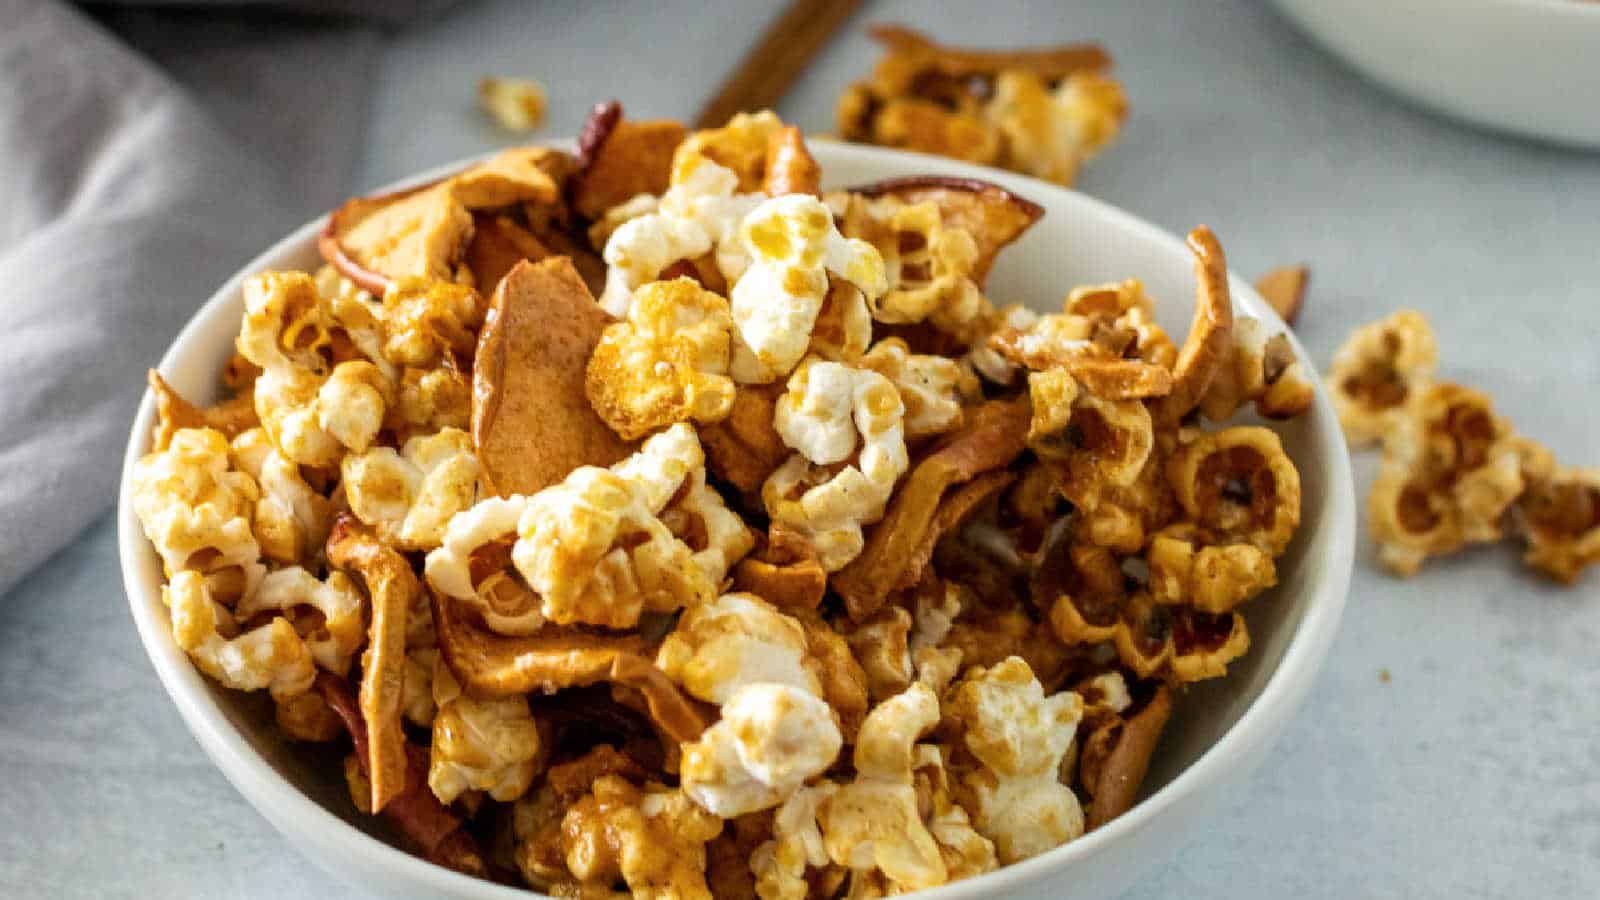 Snacktopia: 13 irresistible snacks to satisfy your cravings